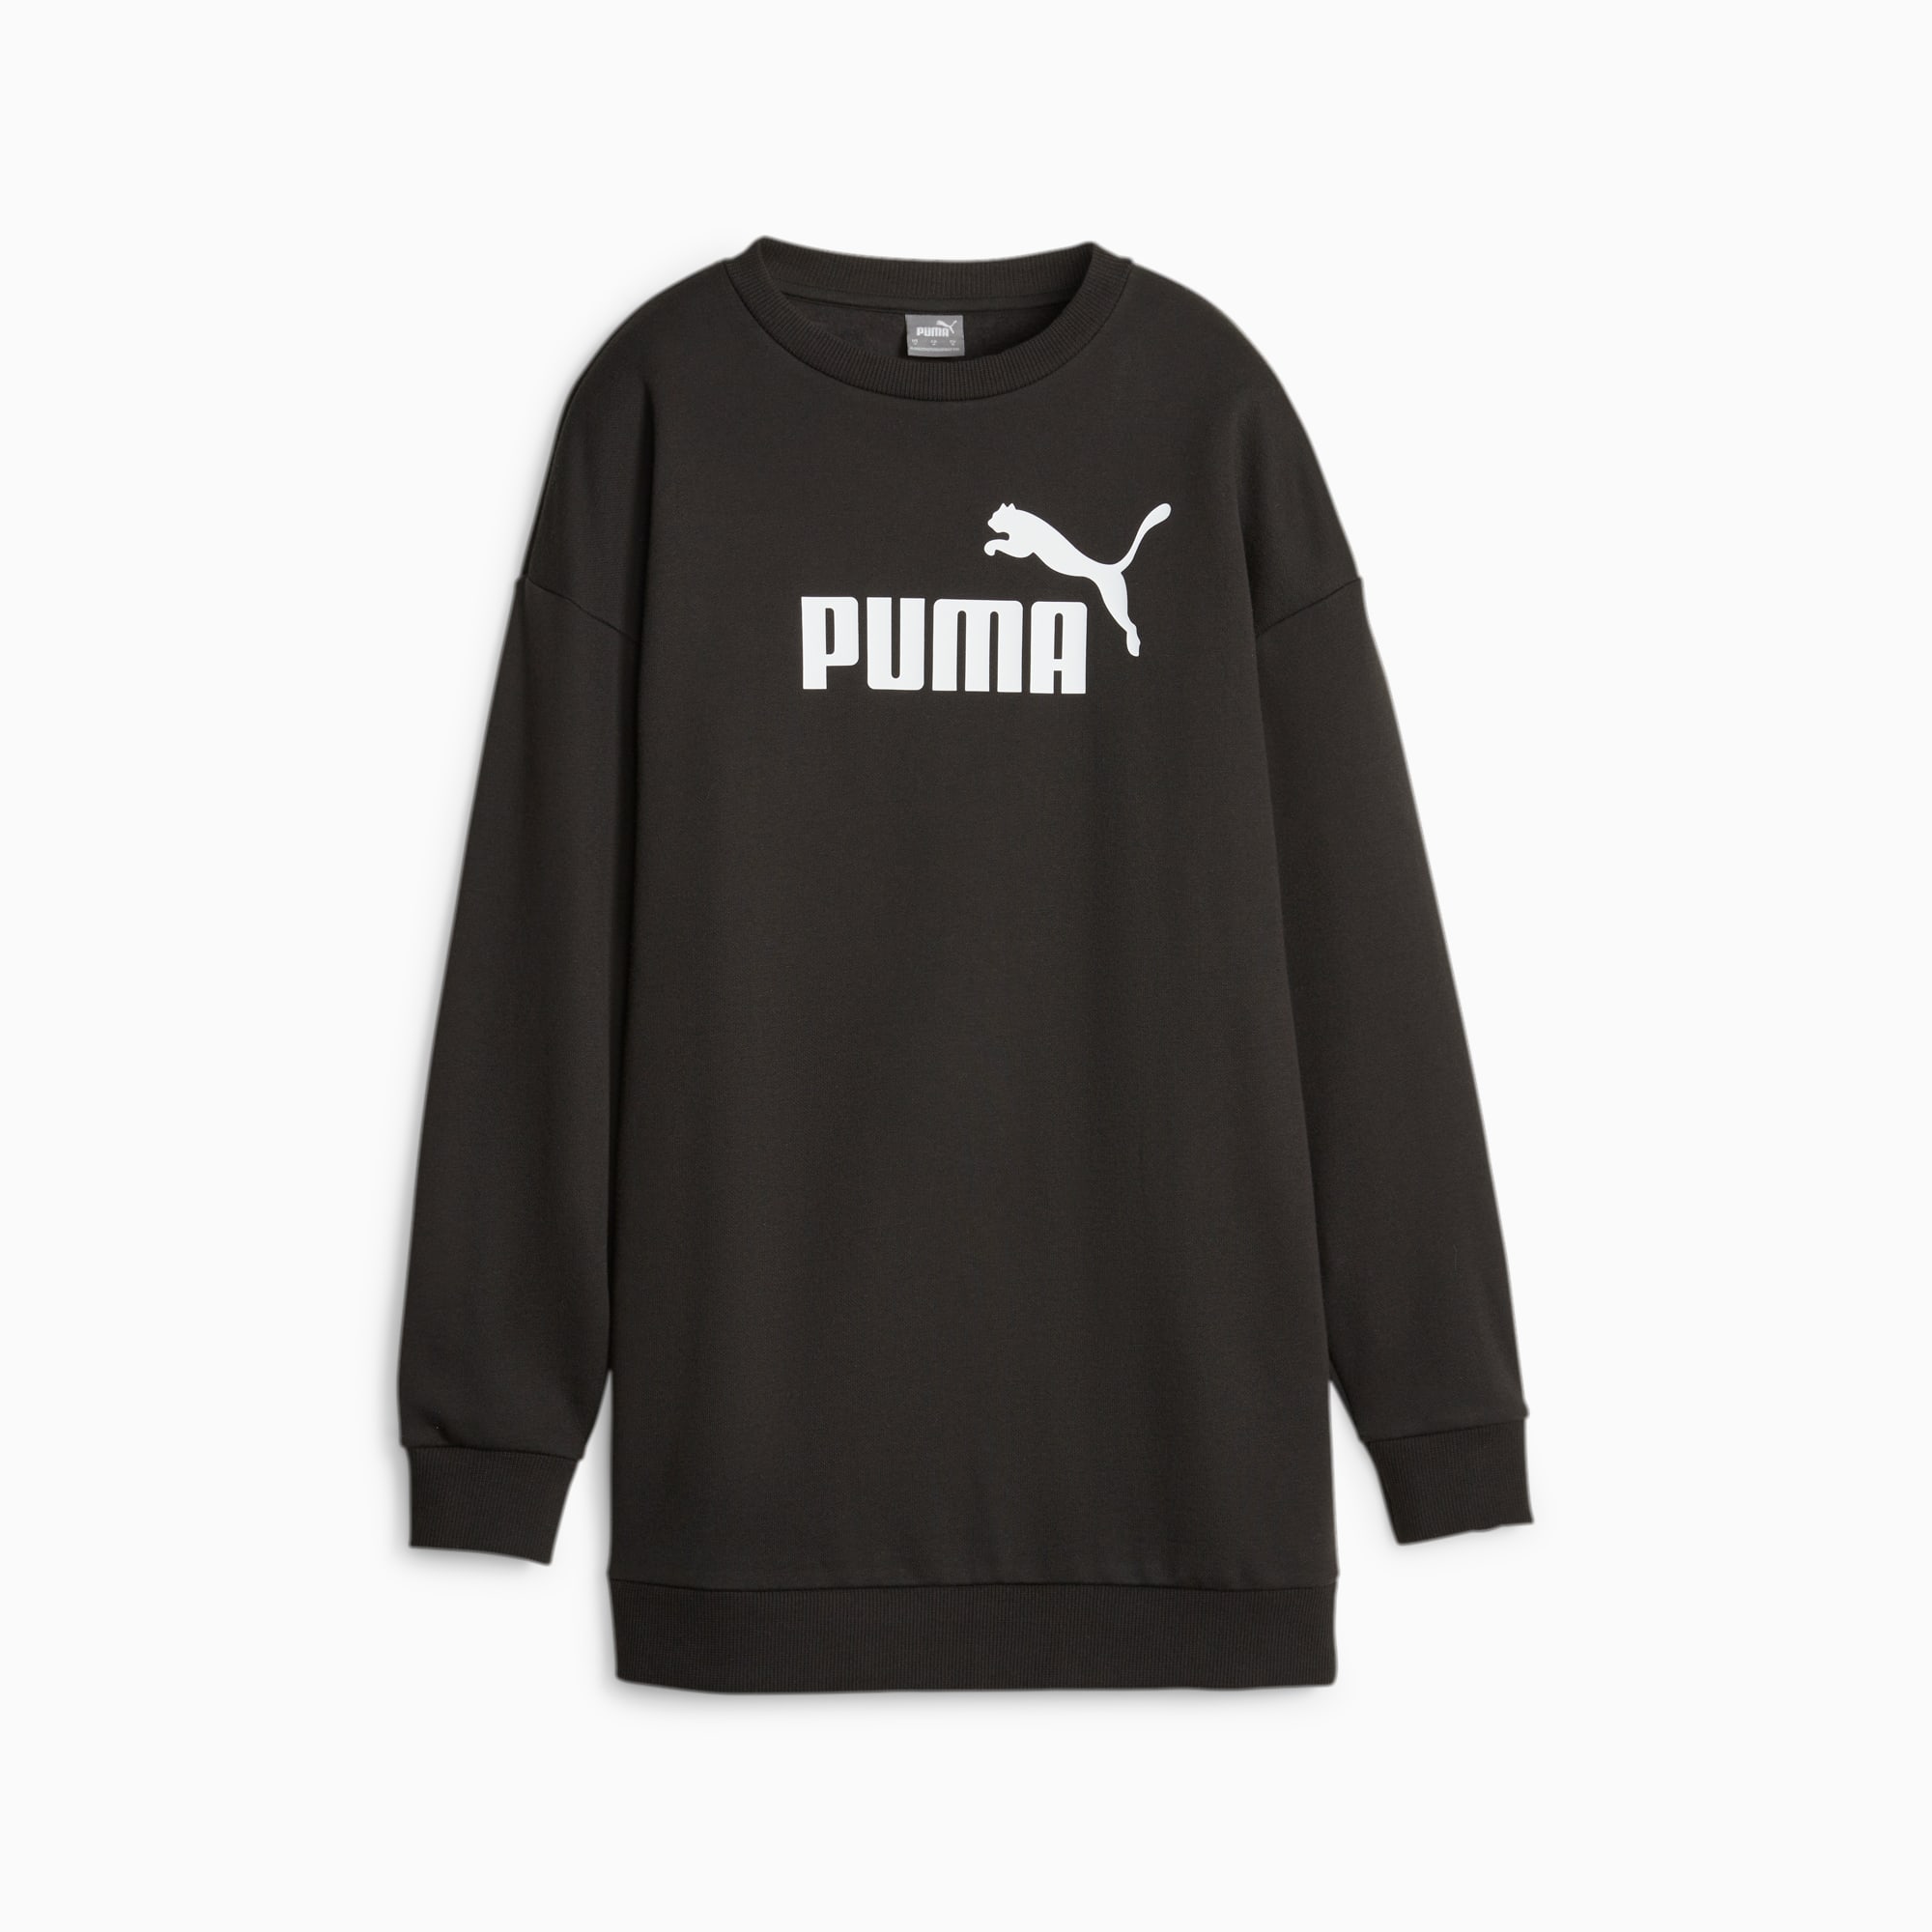 PUMA Ess+ Women's Crew Shirt Dress, Black, Size XL, Clothing